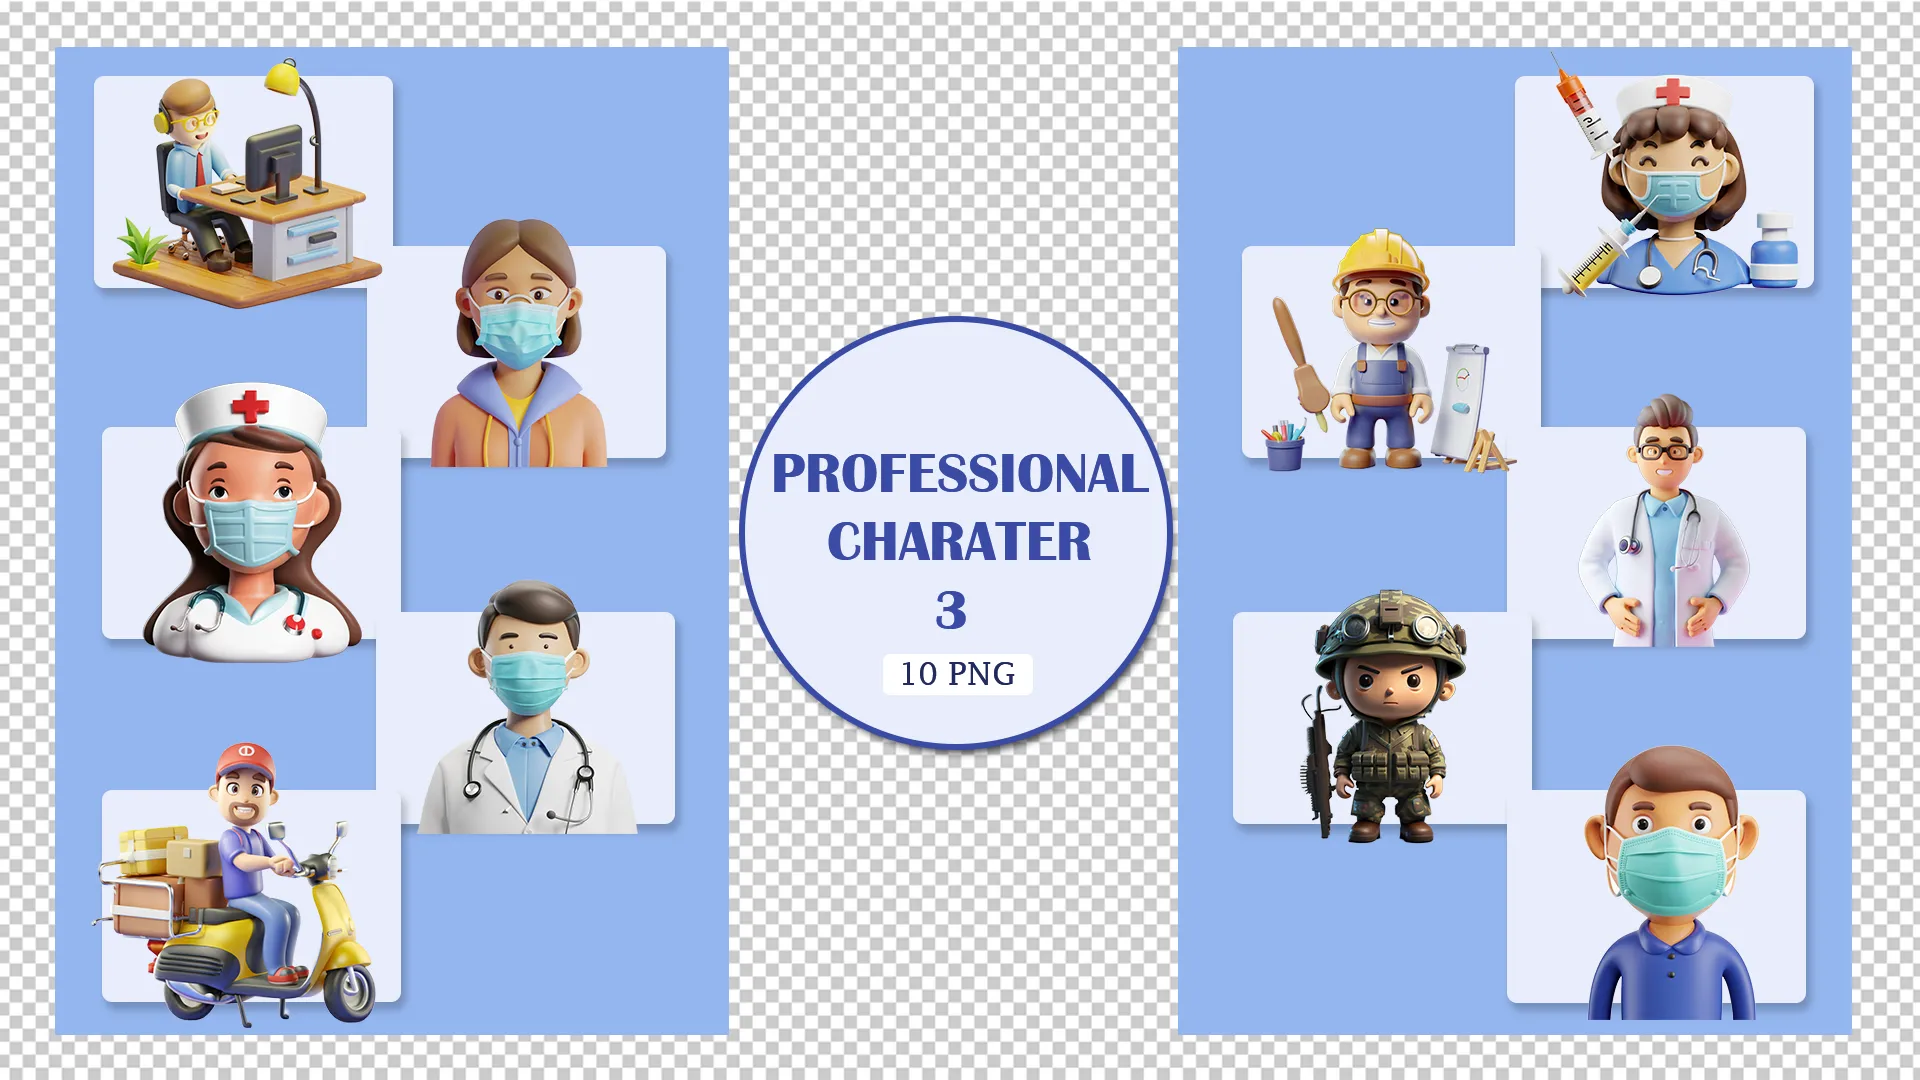 Trending Professional 3D Character Models Pack